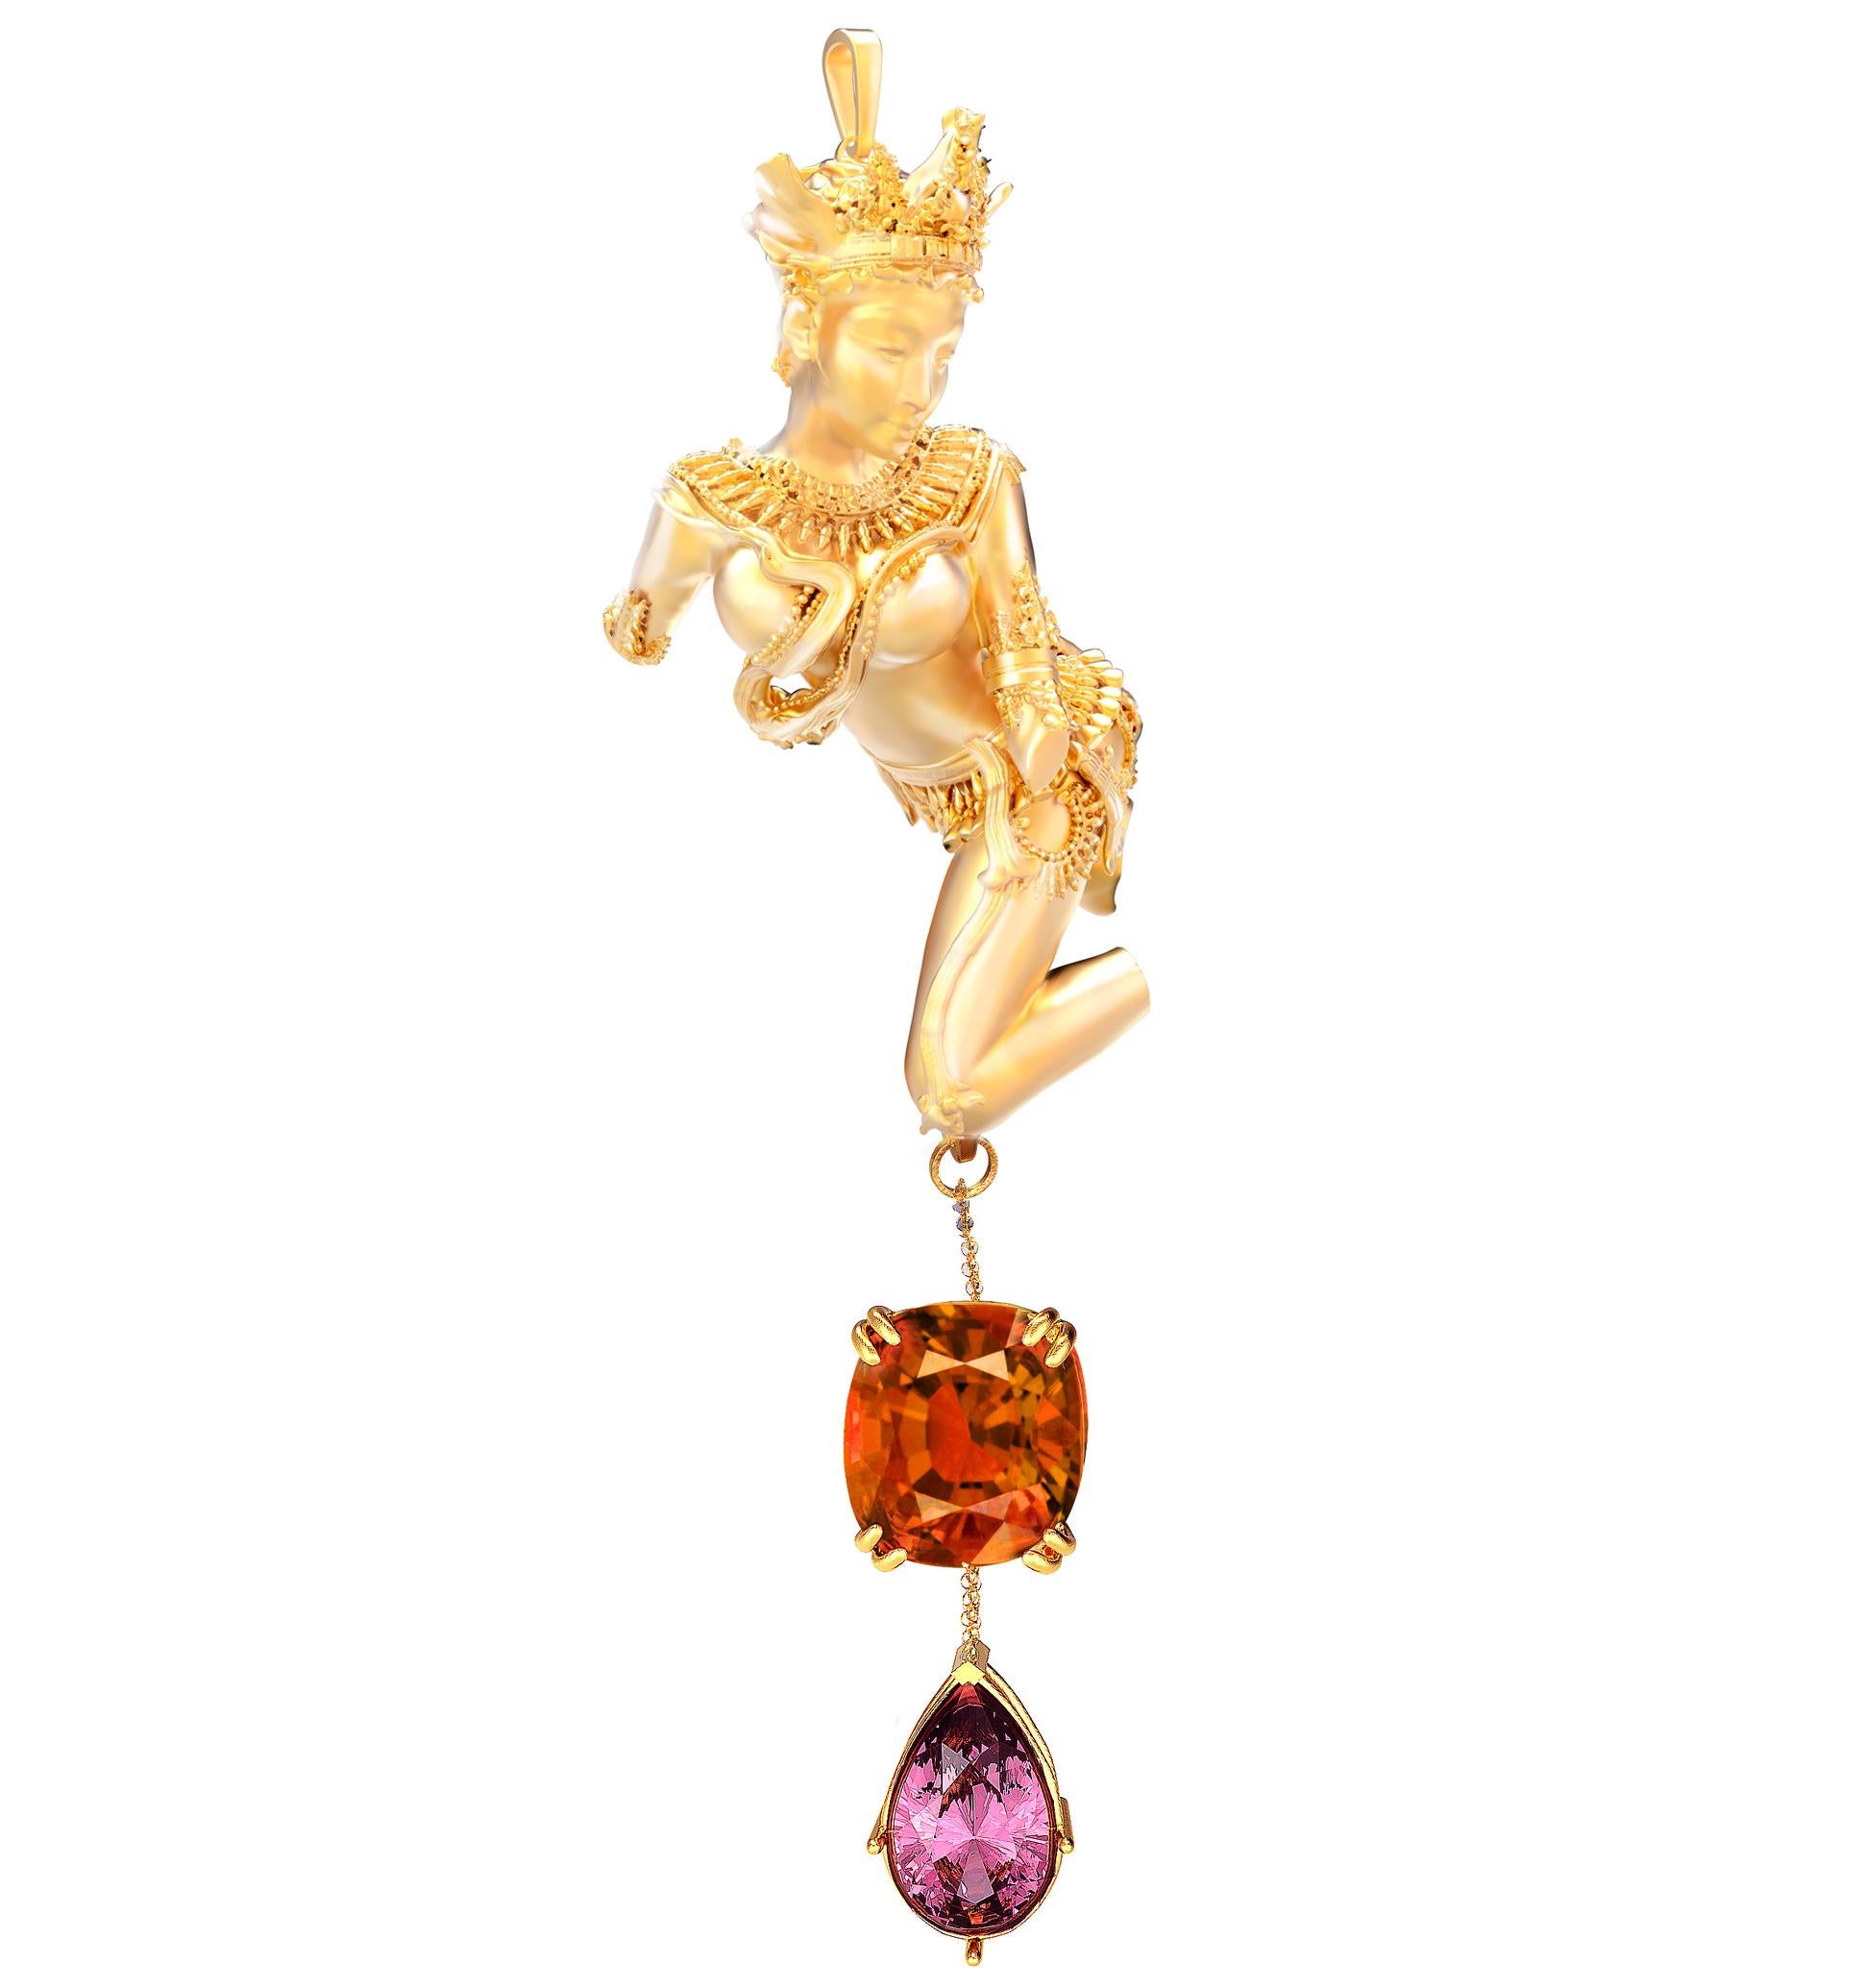 Contemporary 18 Karat Yellow Gold Devata Pendant Necklace with Malaya Garnet and Diamonds For Sale